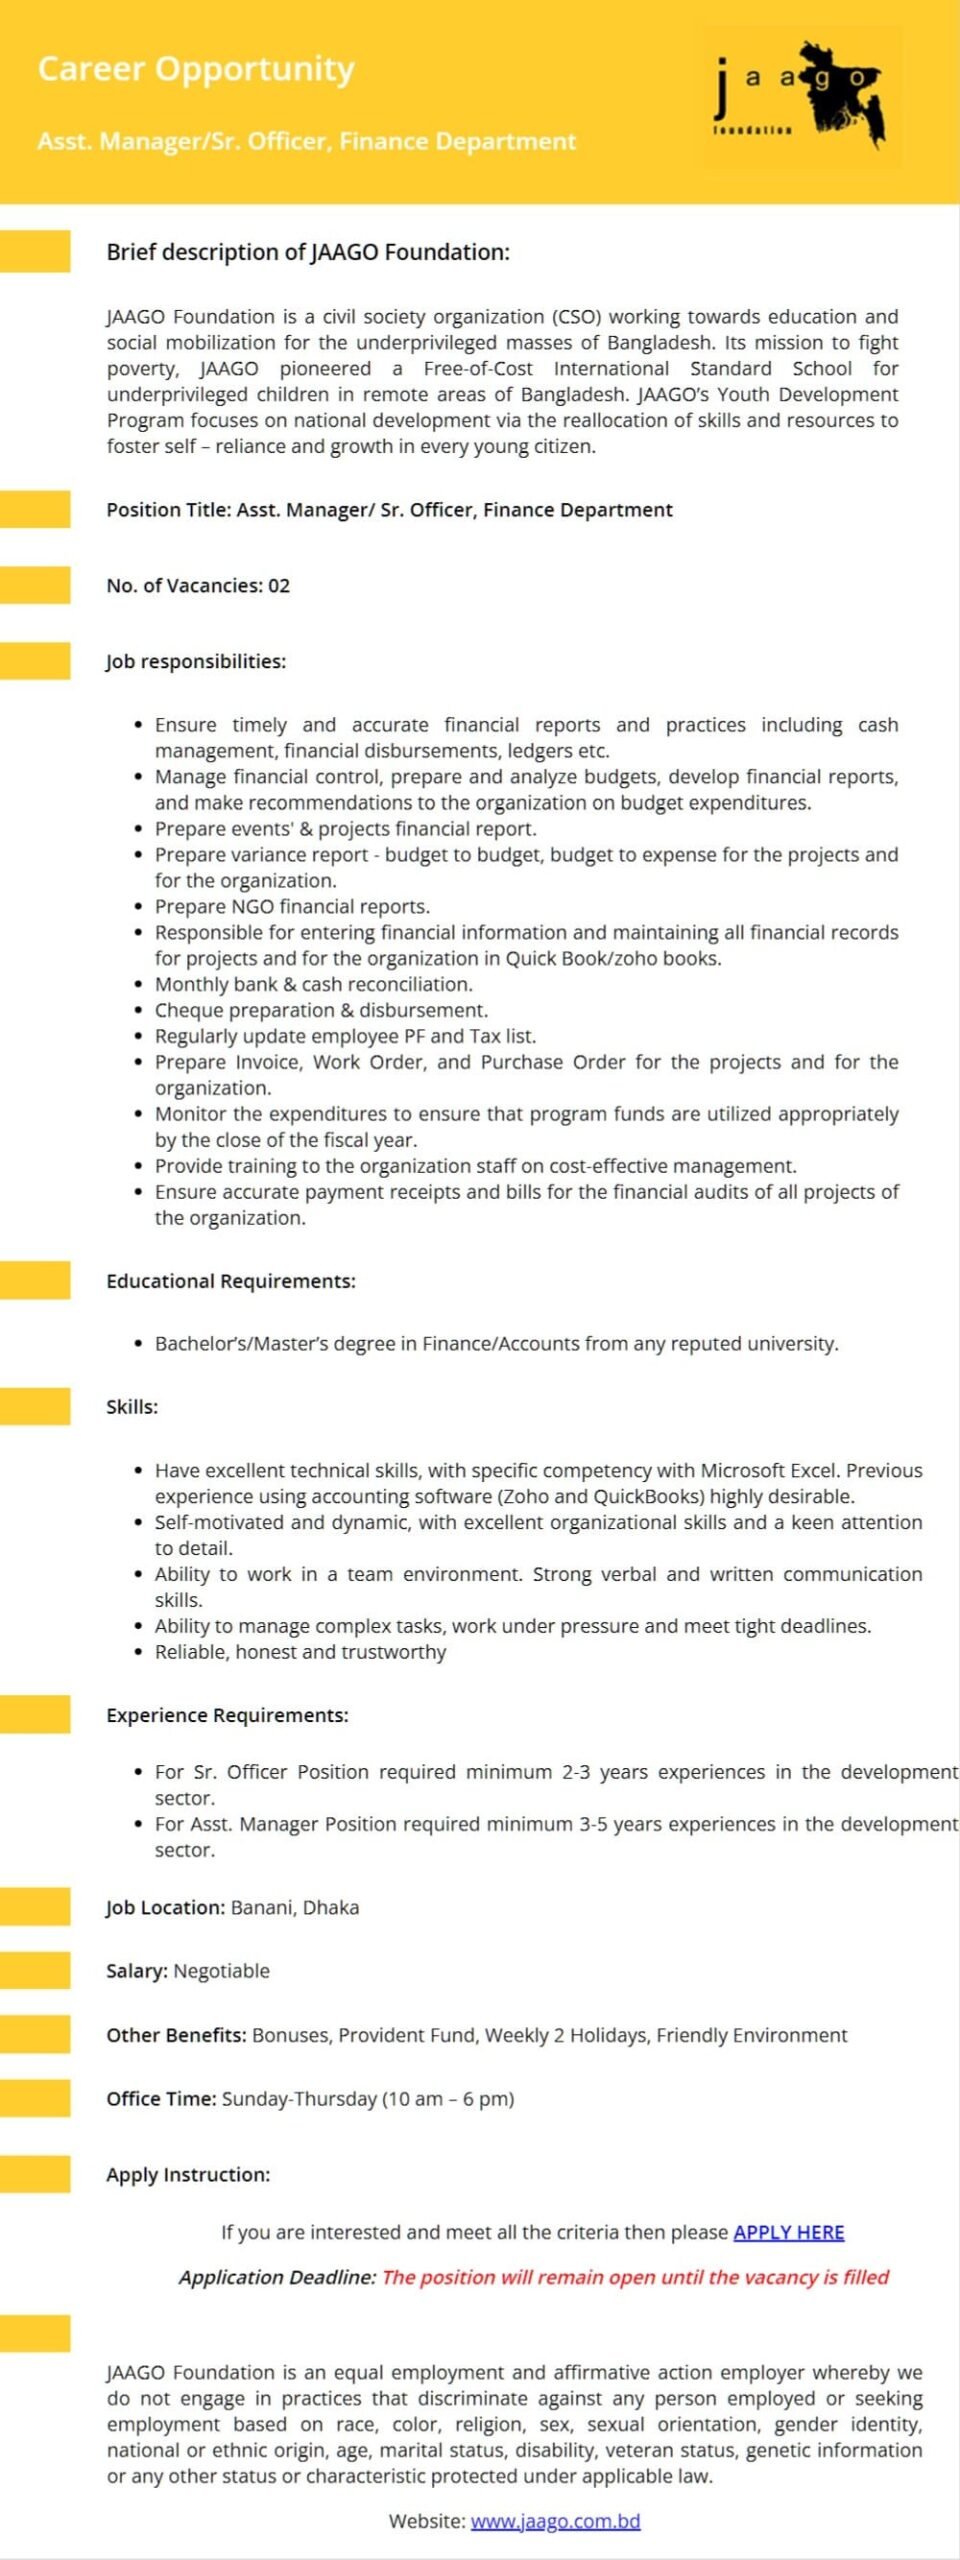 JAAGO Foundation Job Circular 2022 PDF & Image Download